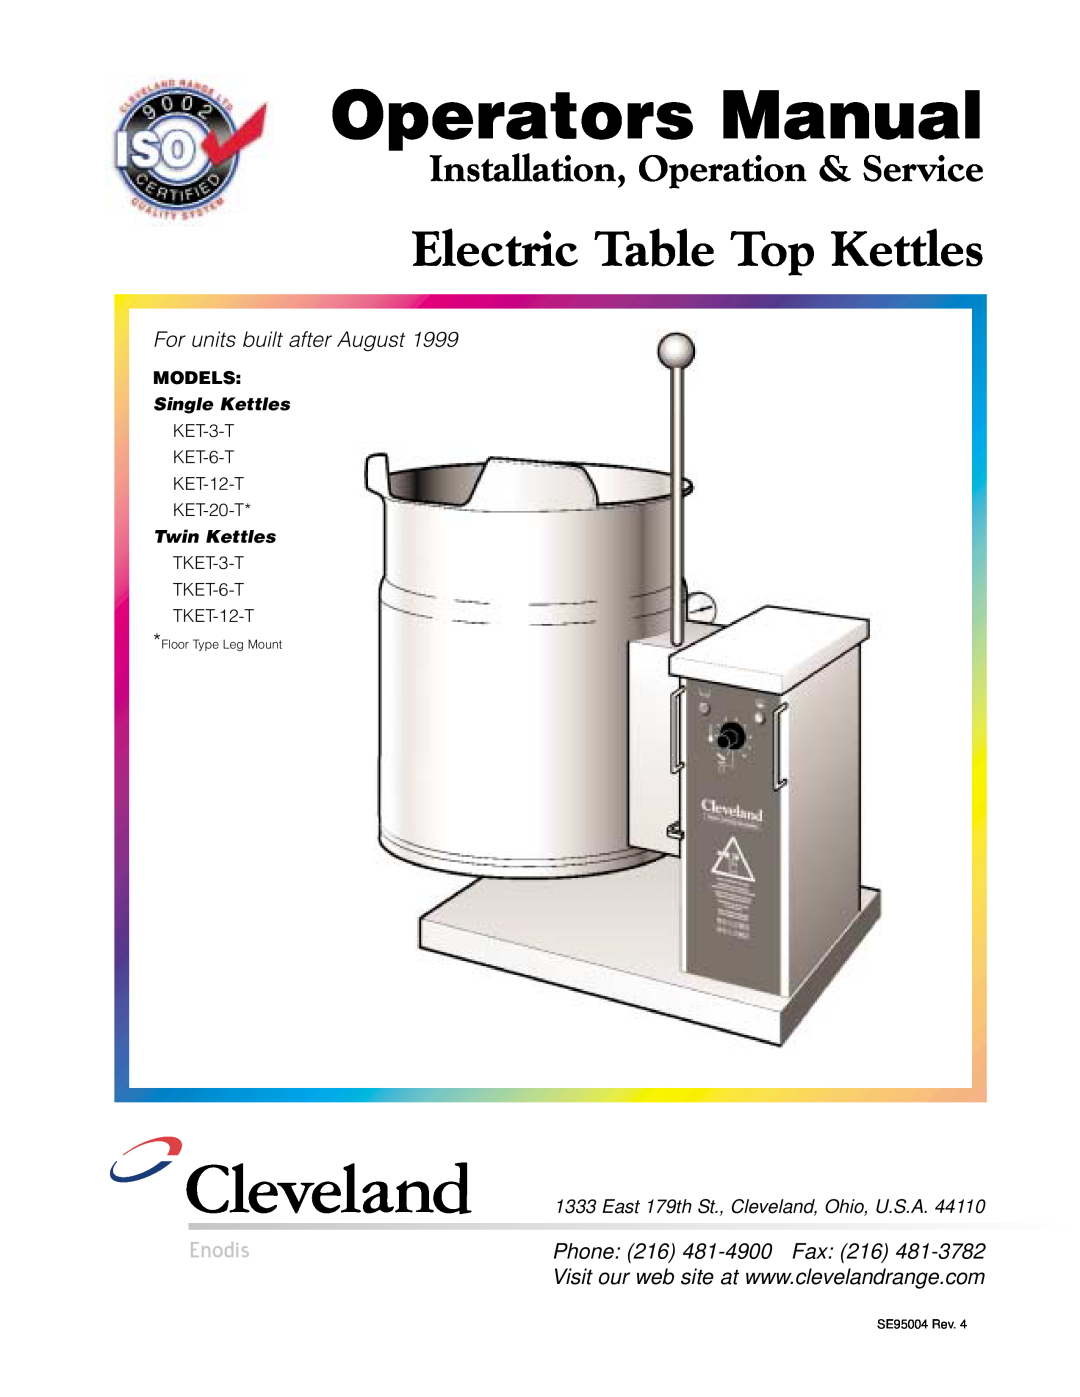 Cleveland Range KET-3-T manual Operators Manual, Electric Table Top Kettles, Installation, Operation & Service, Enodis 